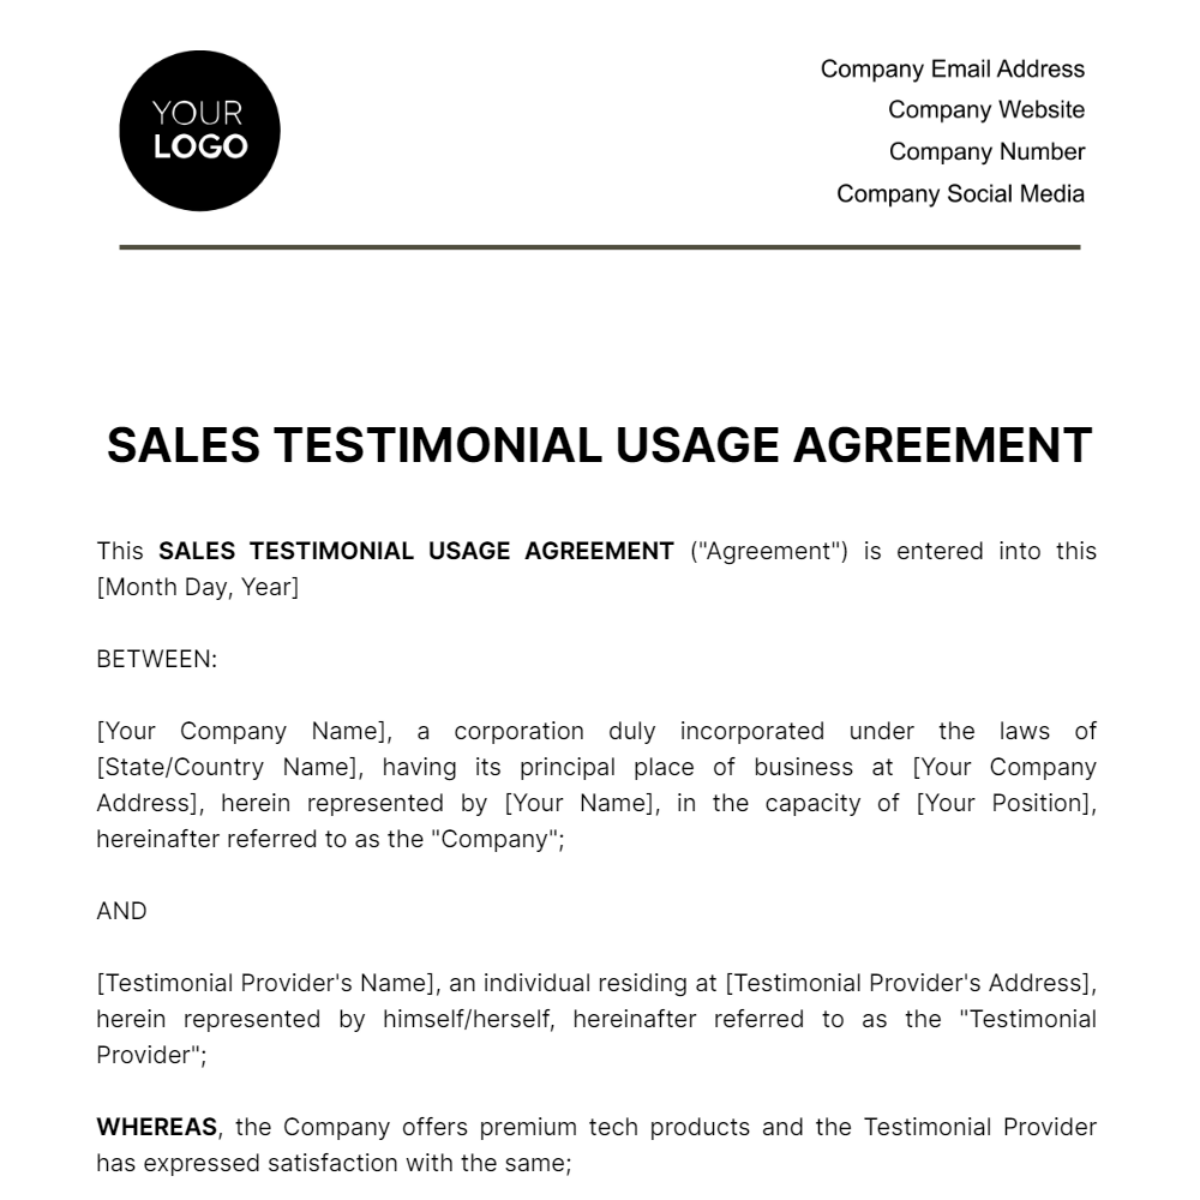 Sales Testimonial Usage Agreement Template